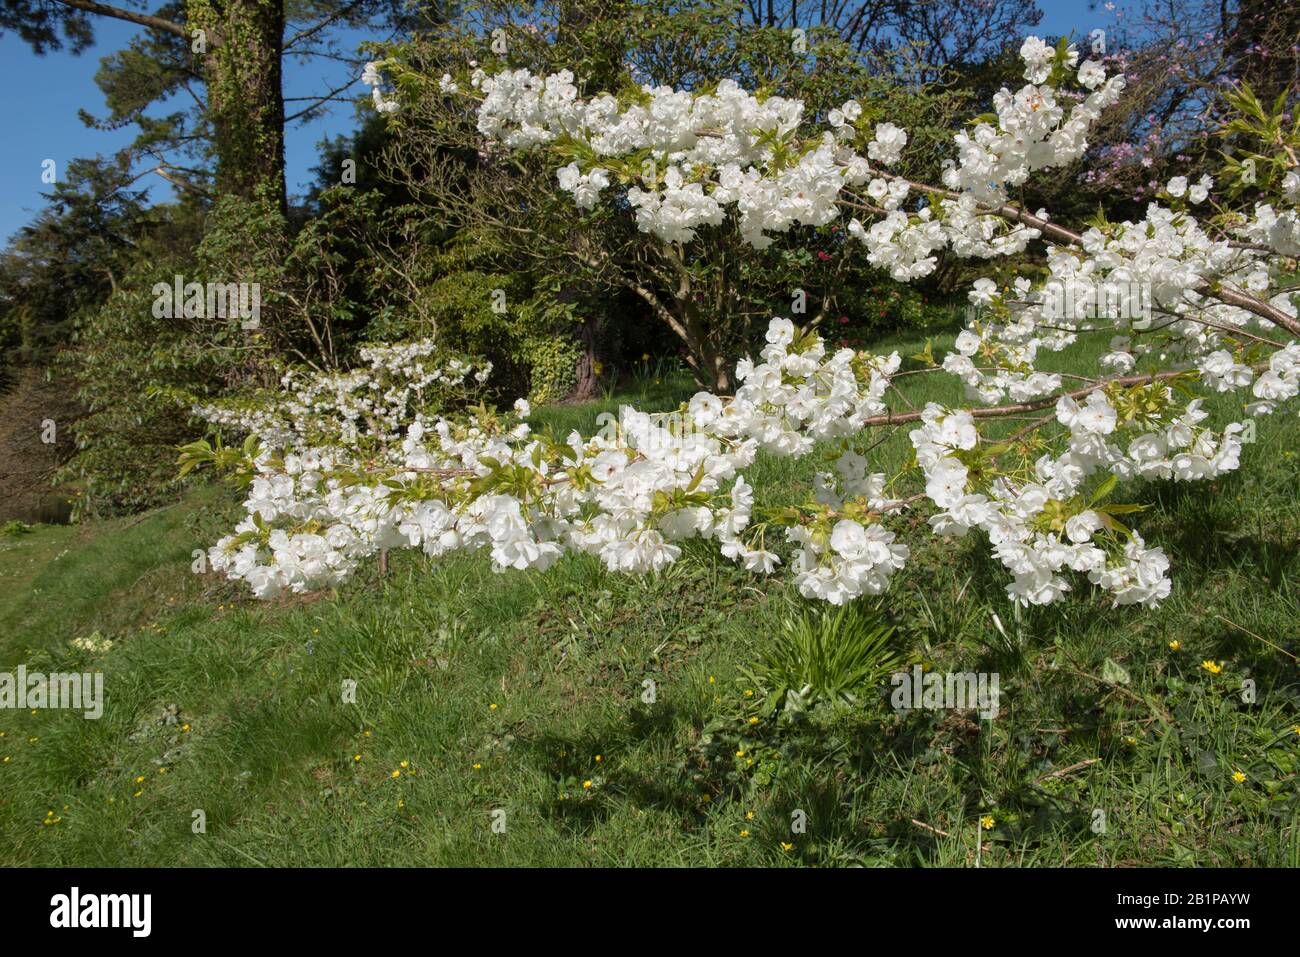 Spring Blossom of the Mount Fuji Cherry Tree (Prunus shirotae) in a Woodland Garden in Rural Devon, England, UK Stock Photo